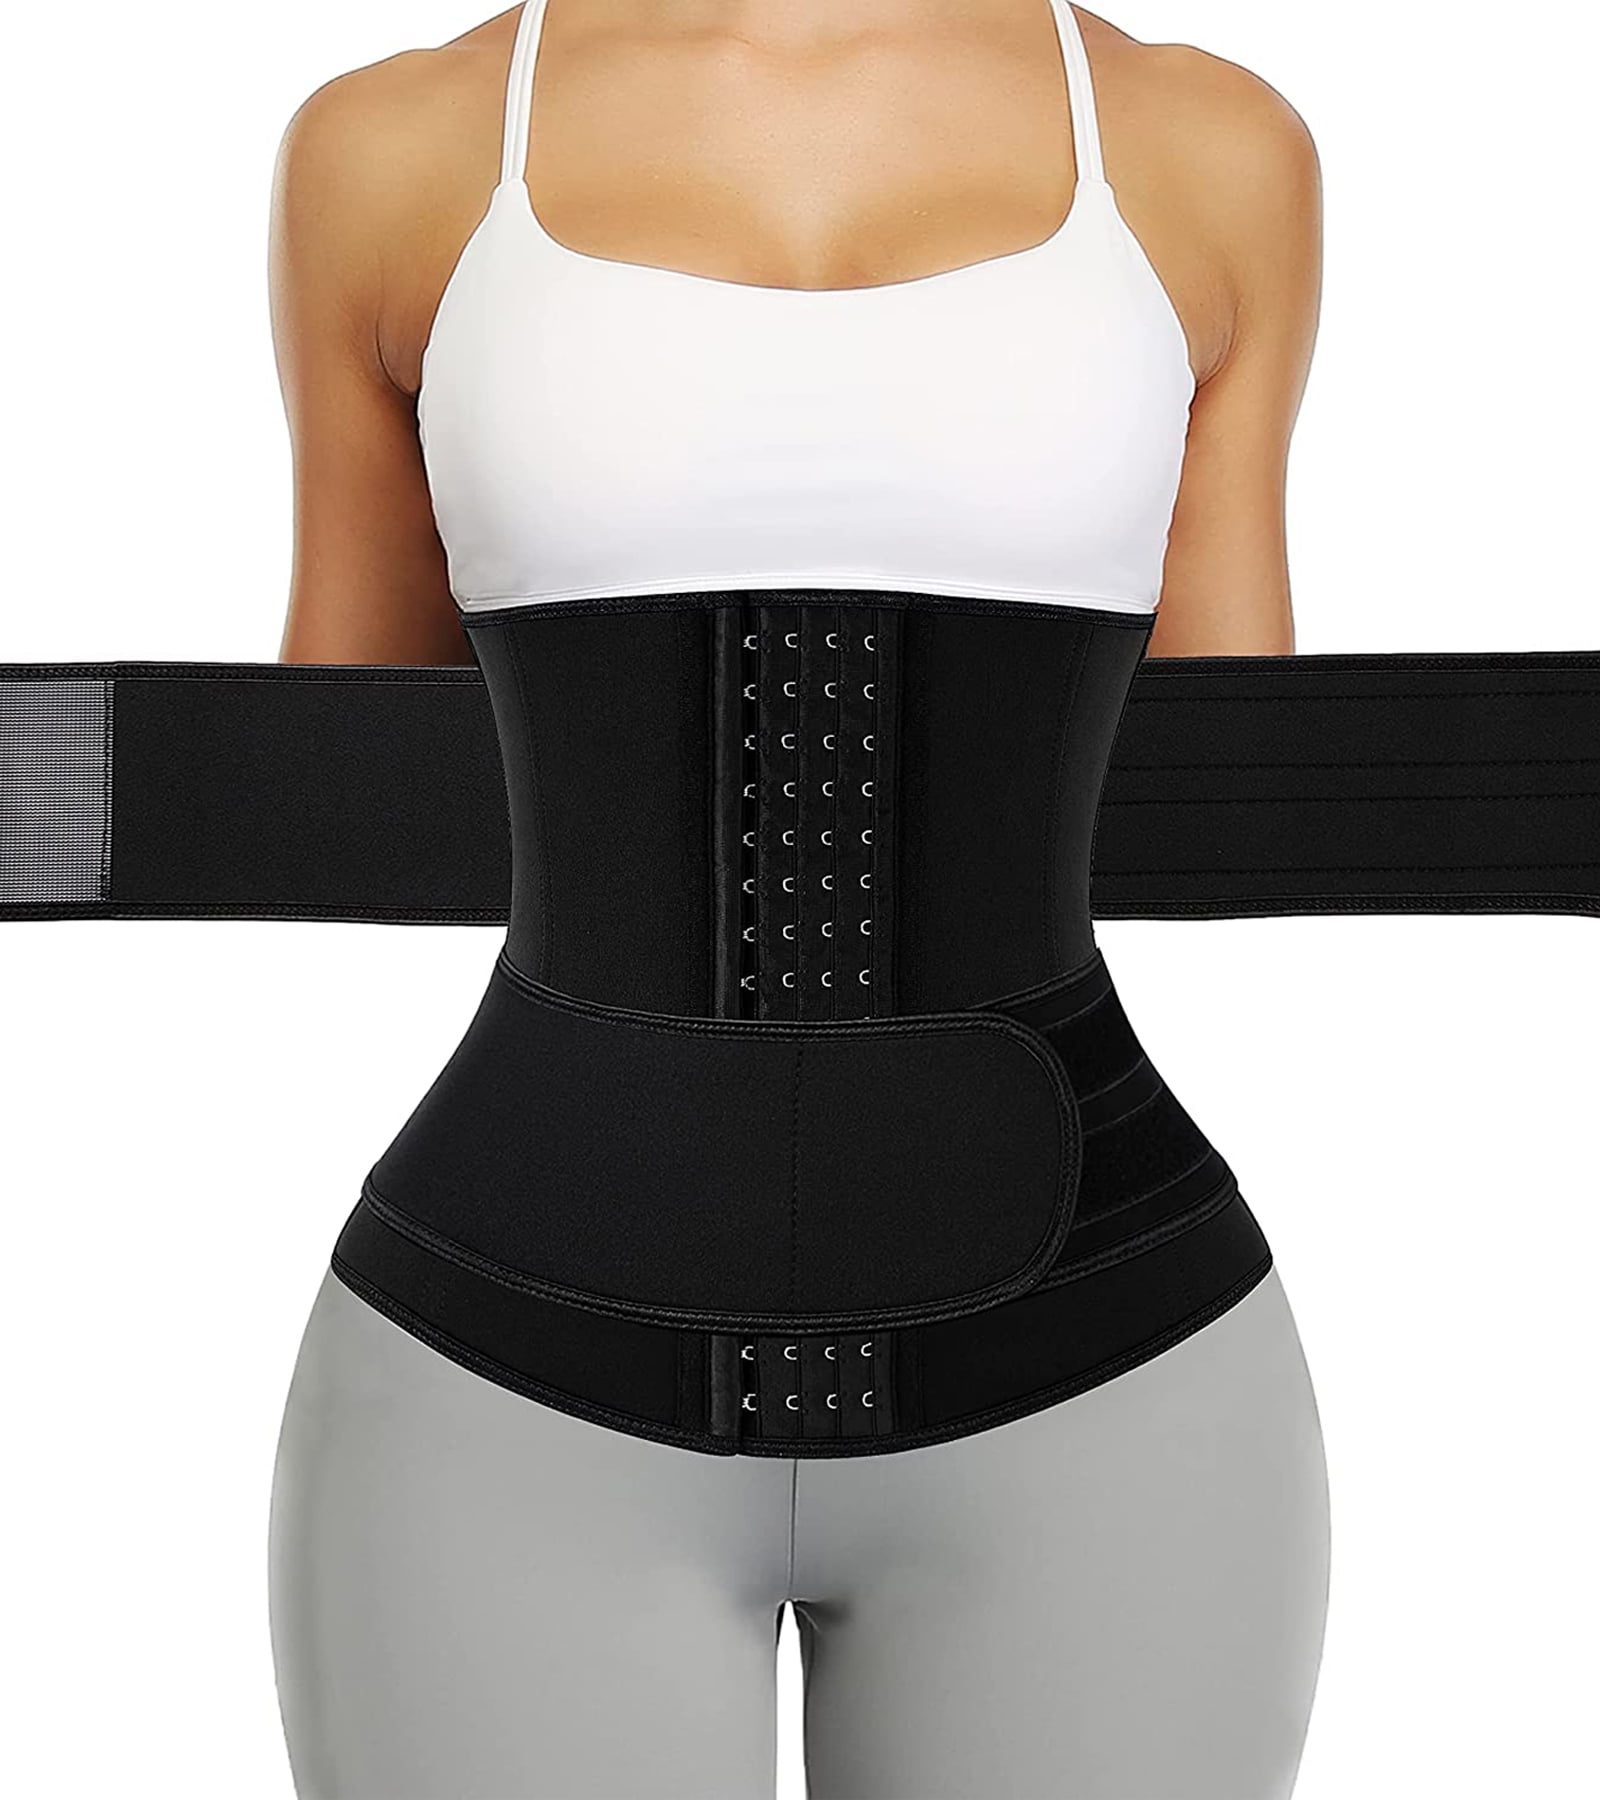 Neoprene High Compression Waist Trainer Corset Abdominal Trimmer Belt Underbust Body Shaper Hot Sweat Belly for Weight Loss 